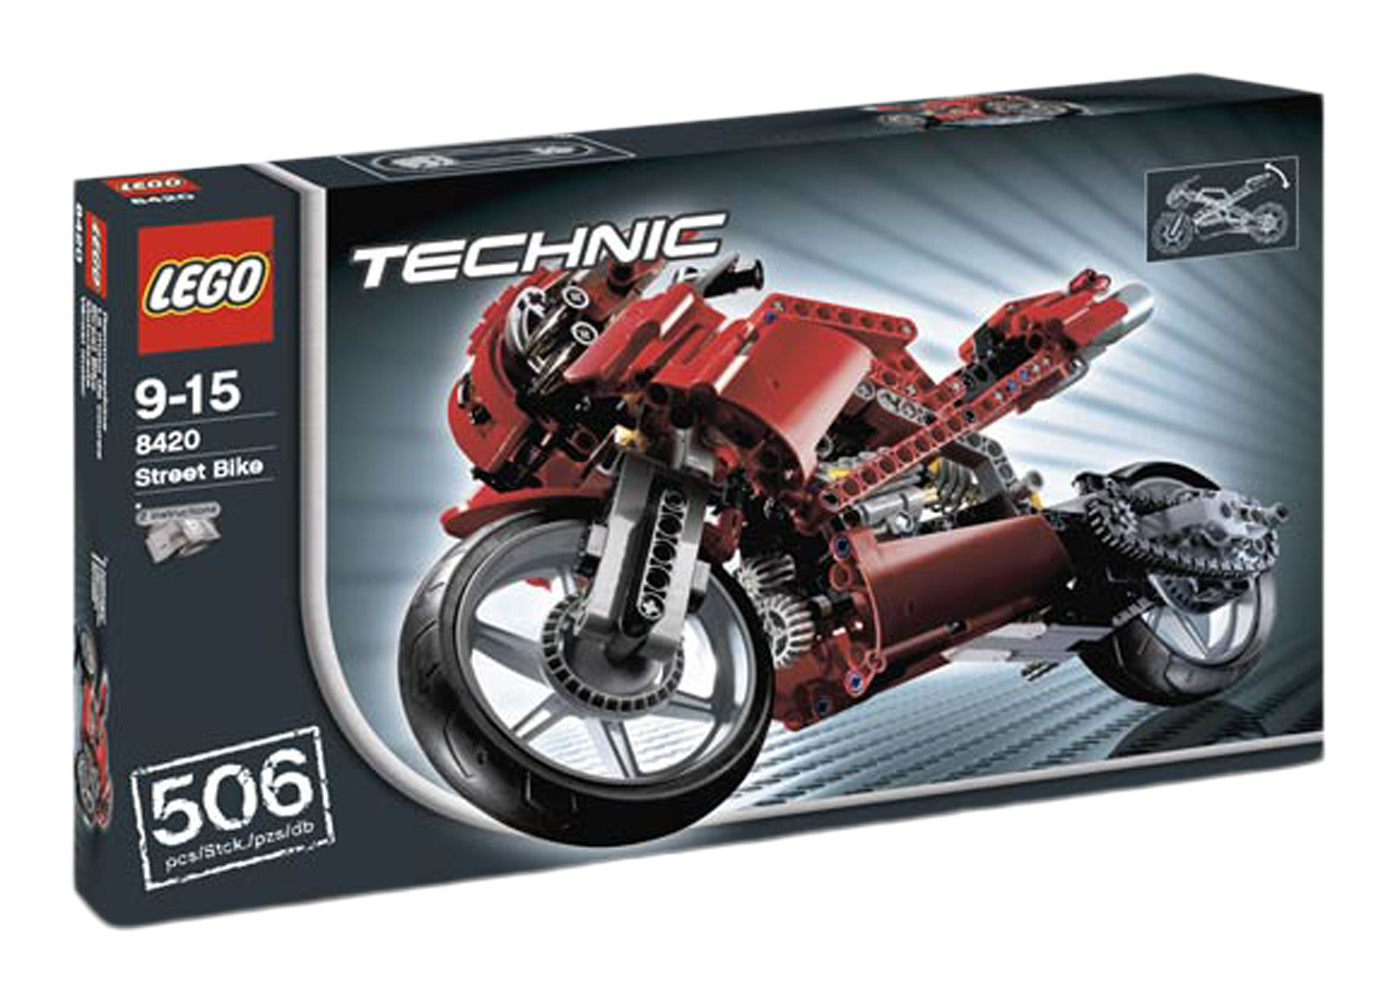 LEGO Technic Street Bike Set 8420 - US